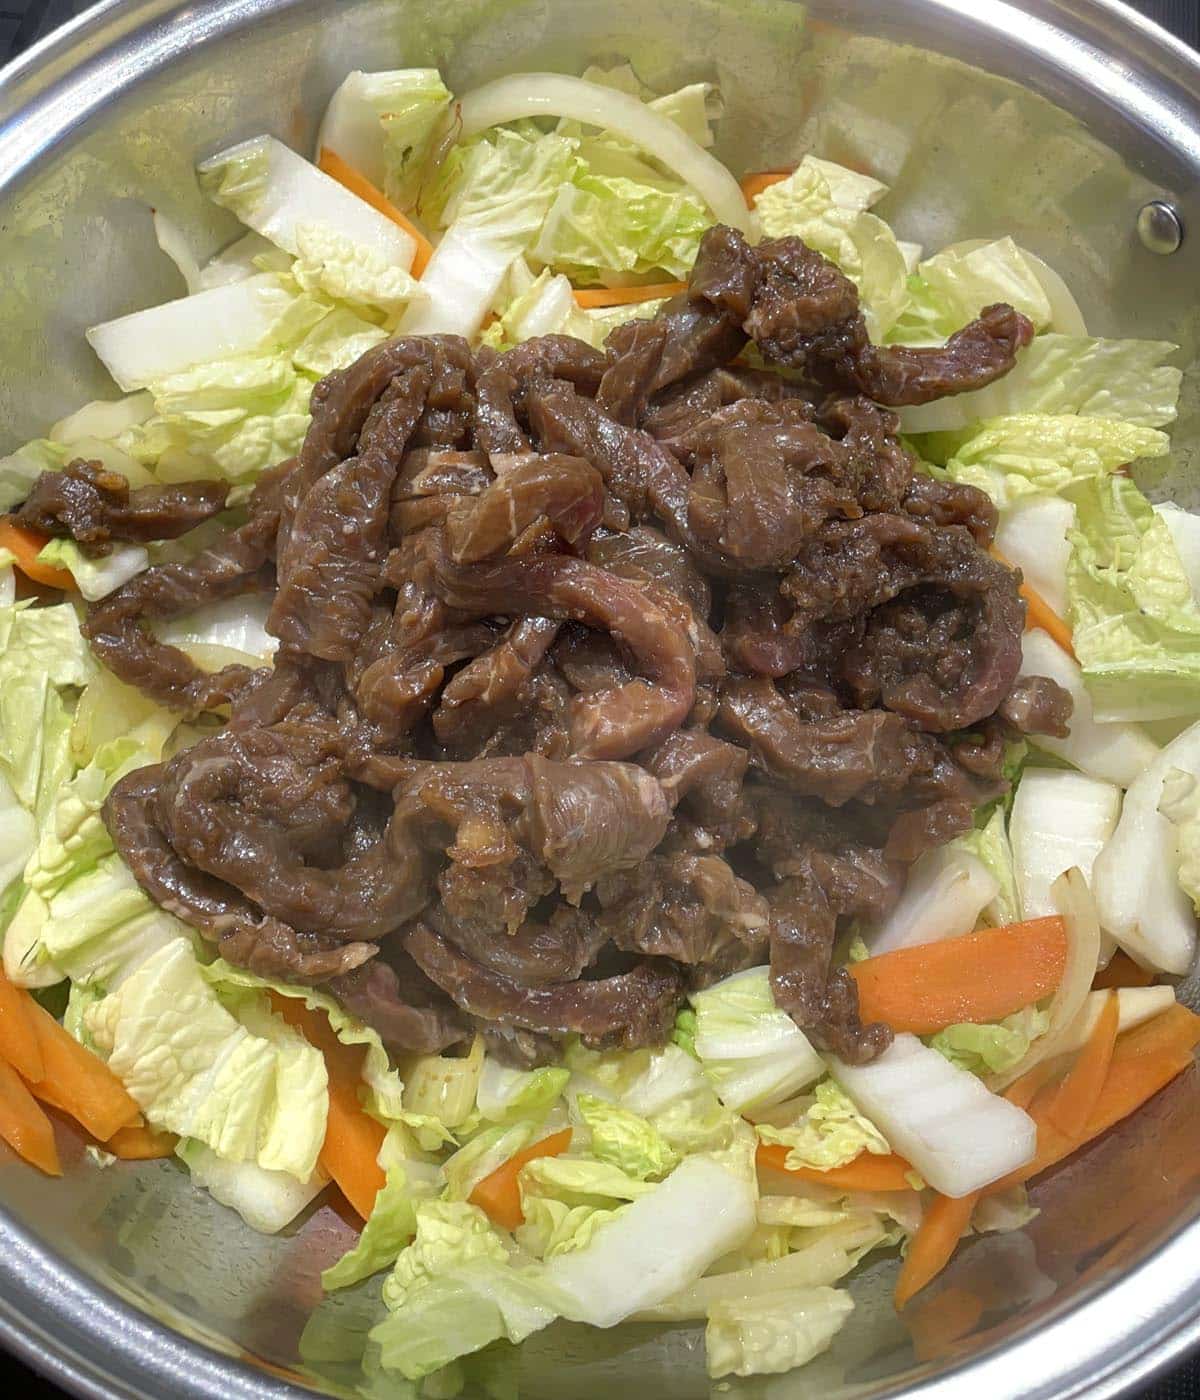 Brown beef slices and vegetables in a metal pan.